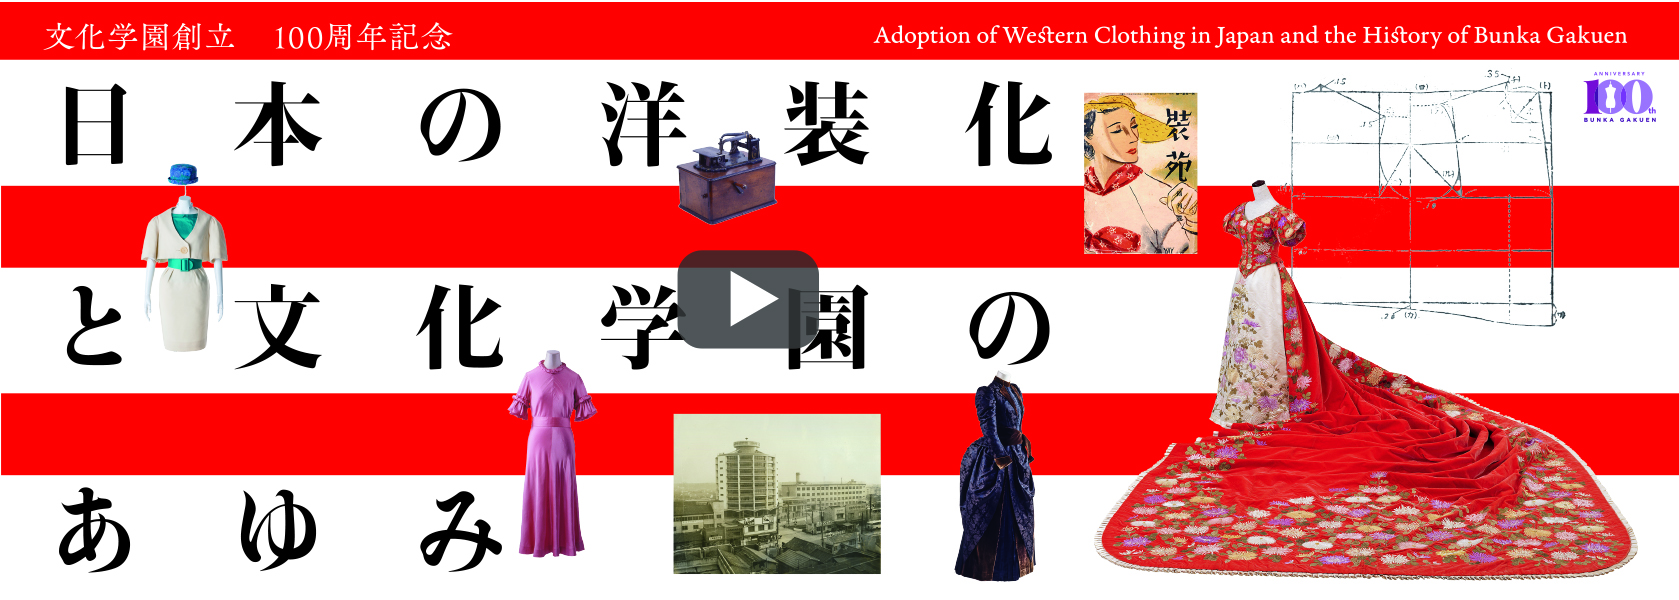 日本の洋装予告動画